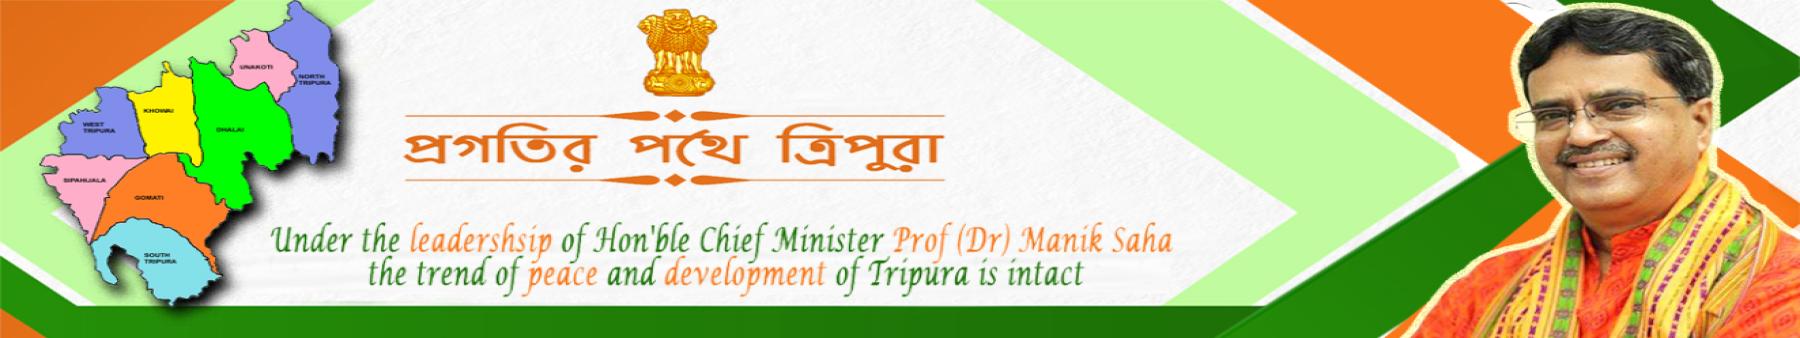 pragatir pothe Tripura